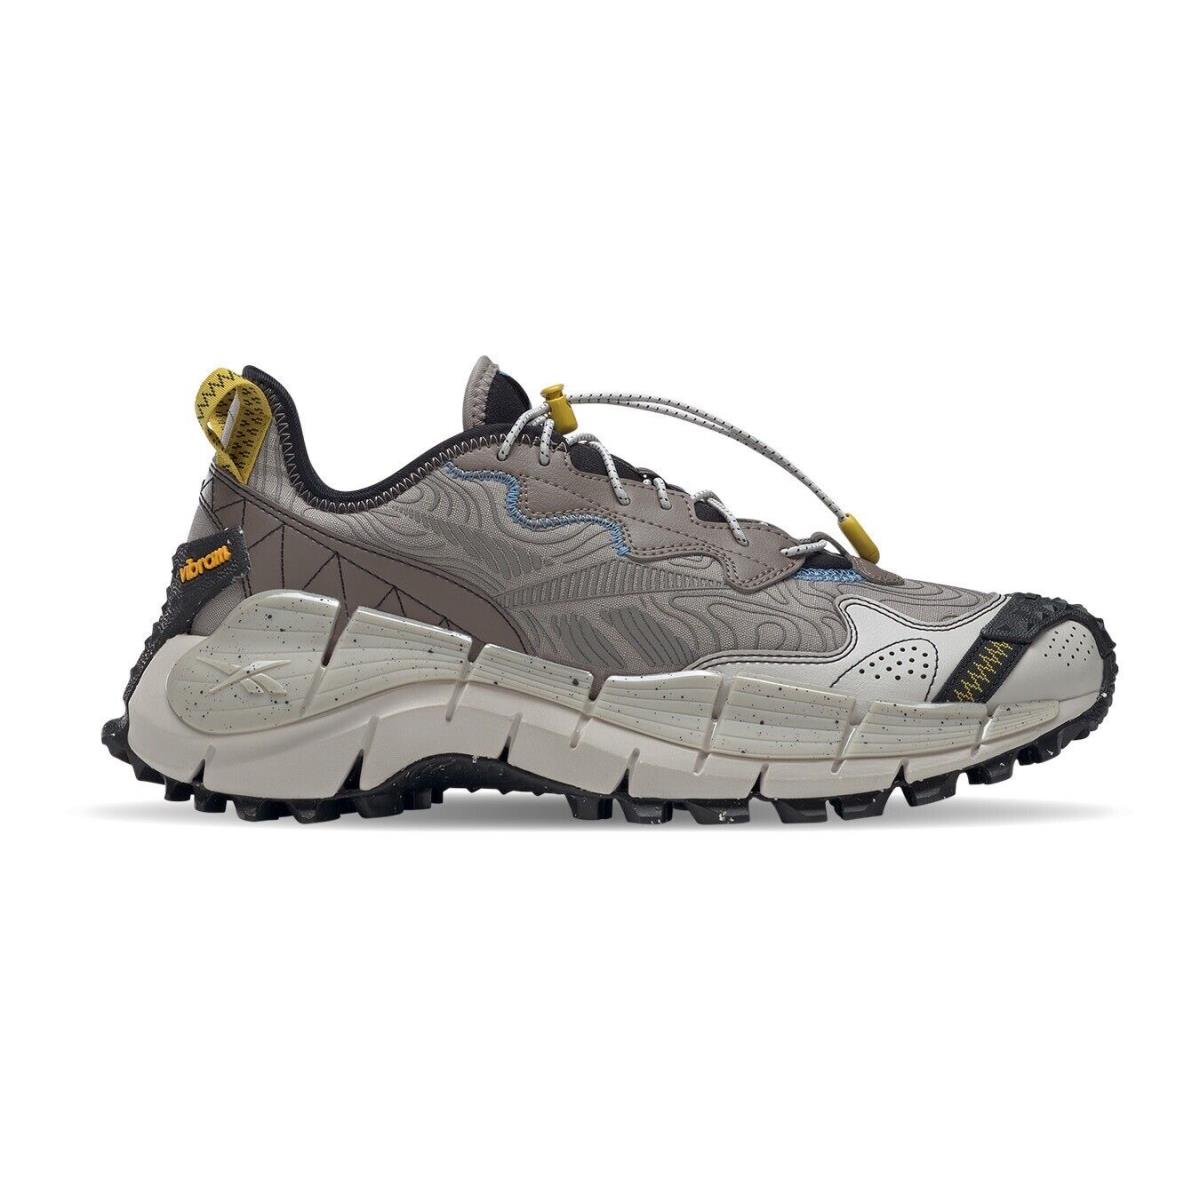 Men Reebok Zig Kinetica II Edge Trail Running Shoes Sz 7 Brown Tan Black GX0117 - Brown